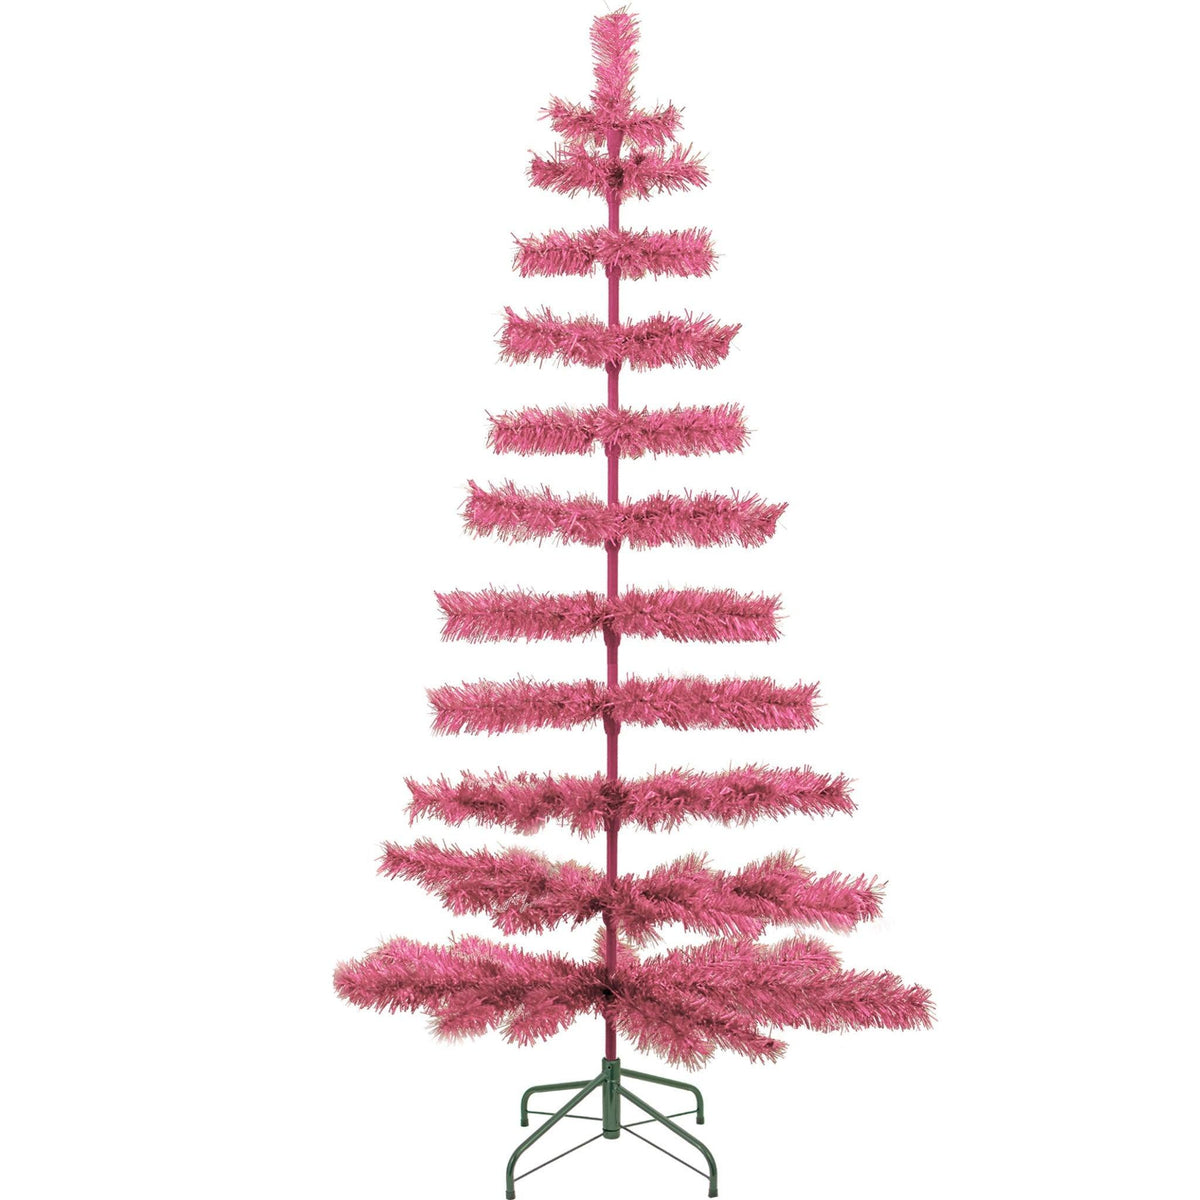 60in Tall Pink Tinsel Christmas Trees on sale at leedisplay.com